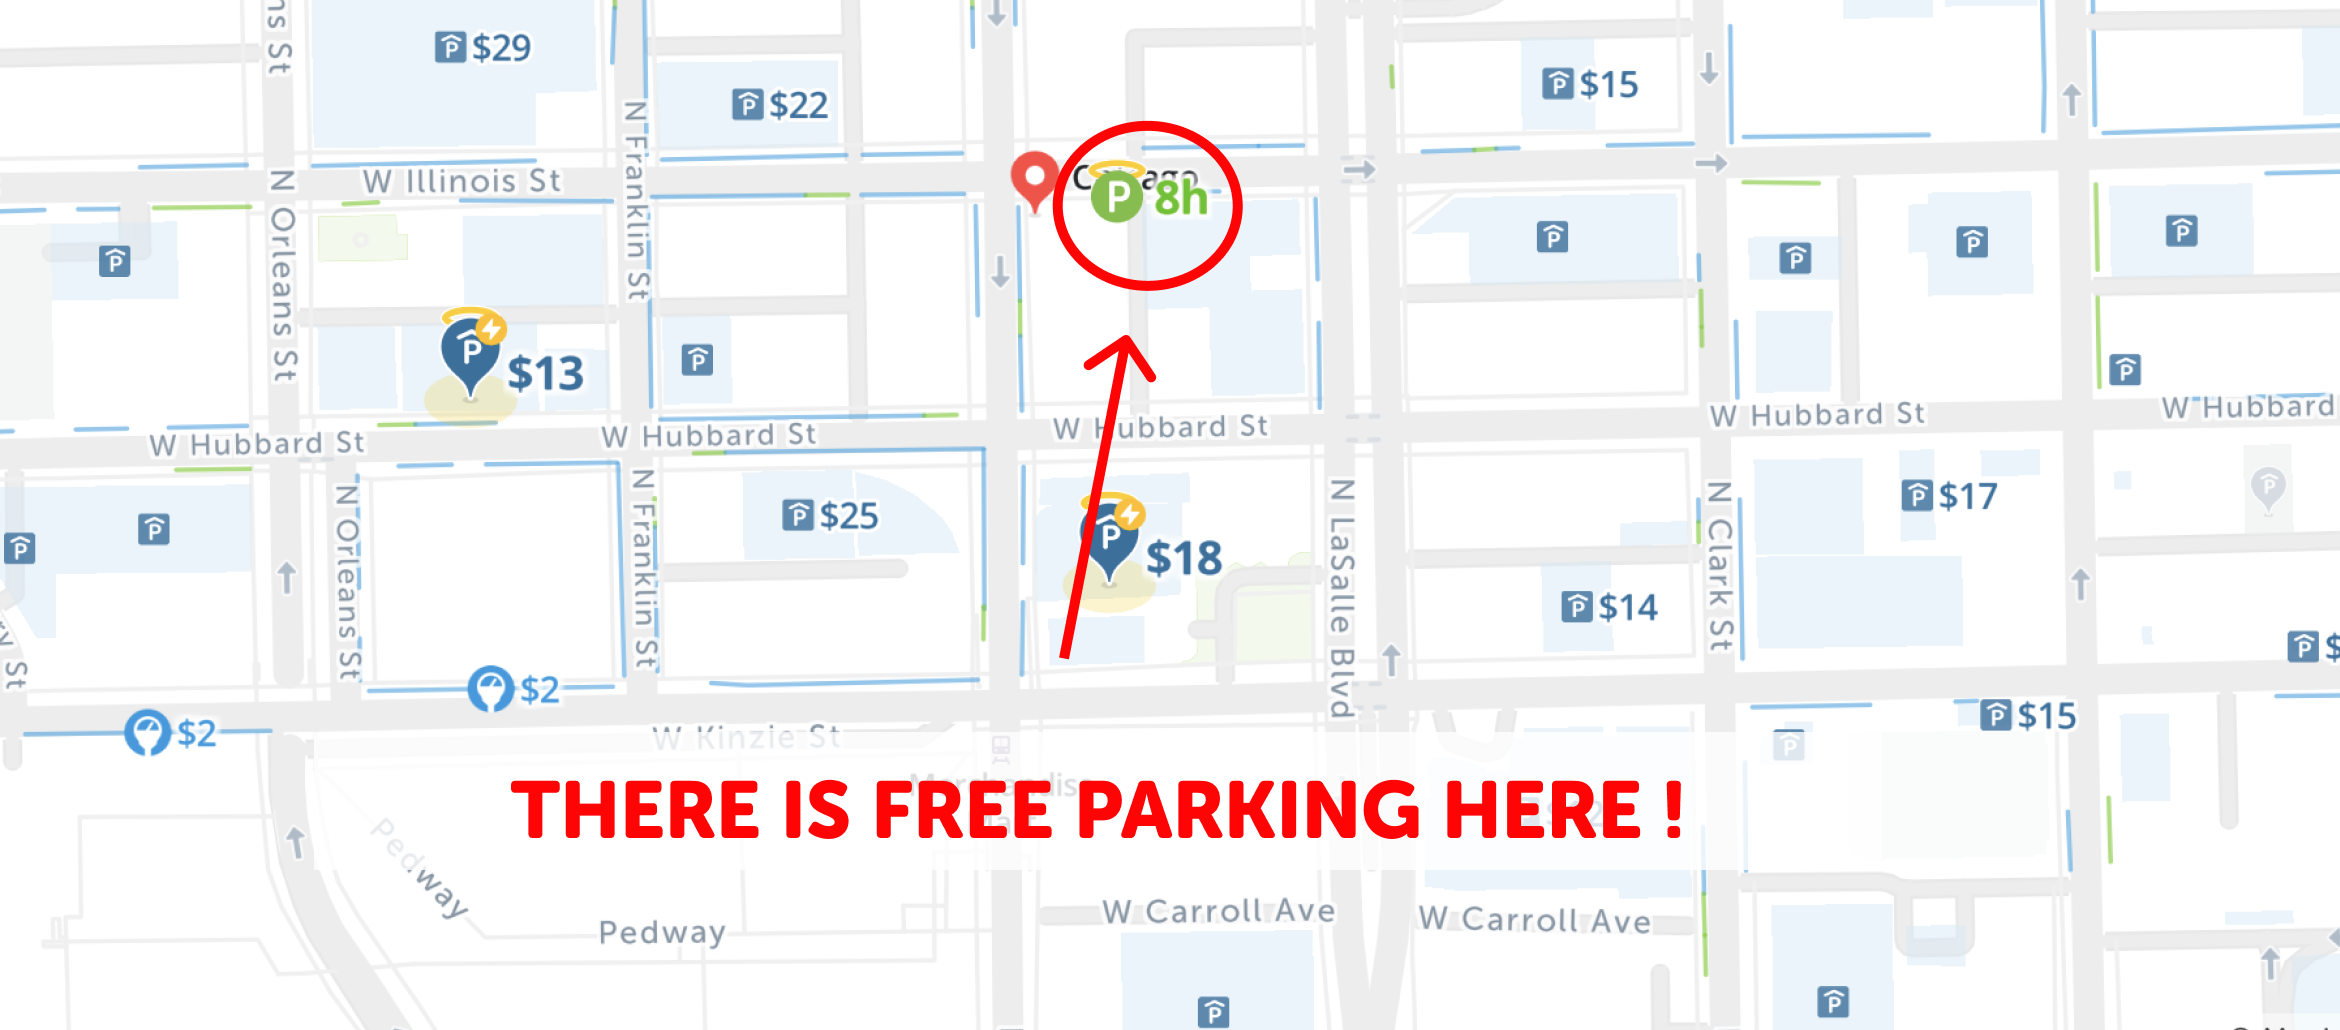 map of free parking in Chicago - SpotAngels